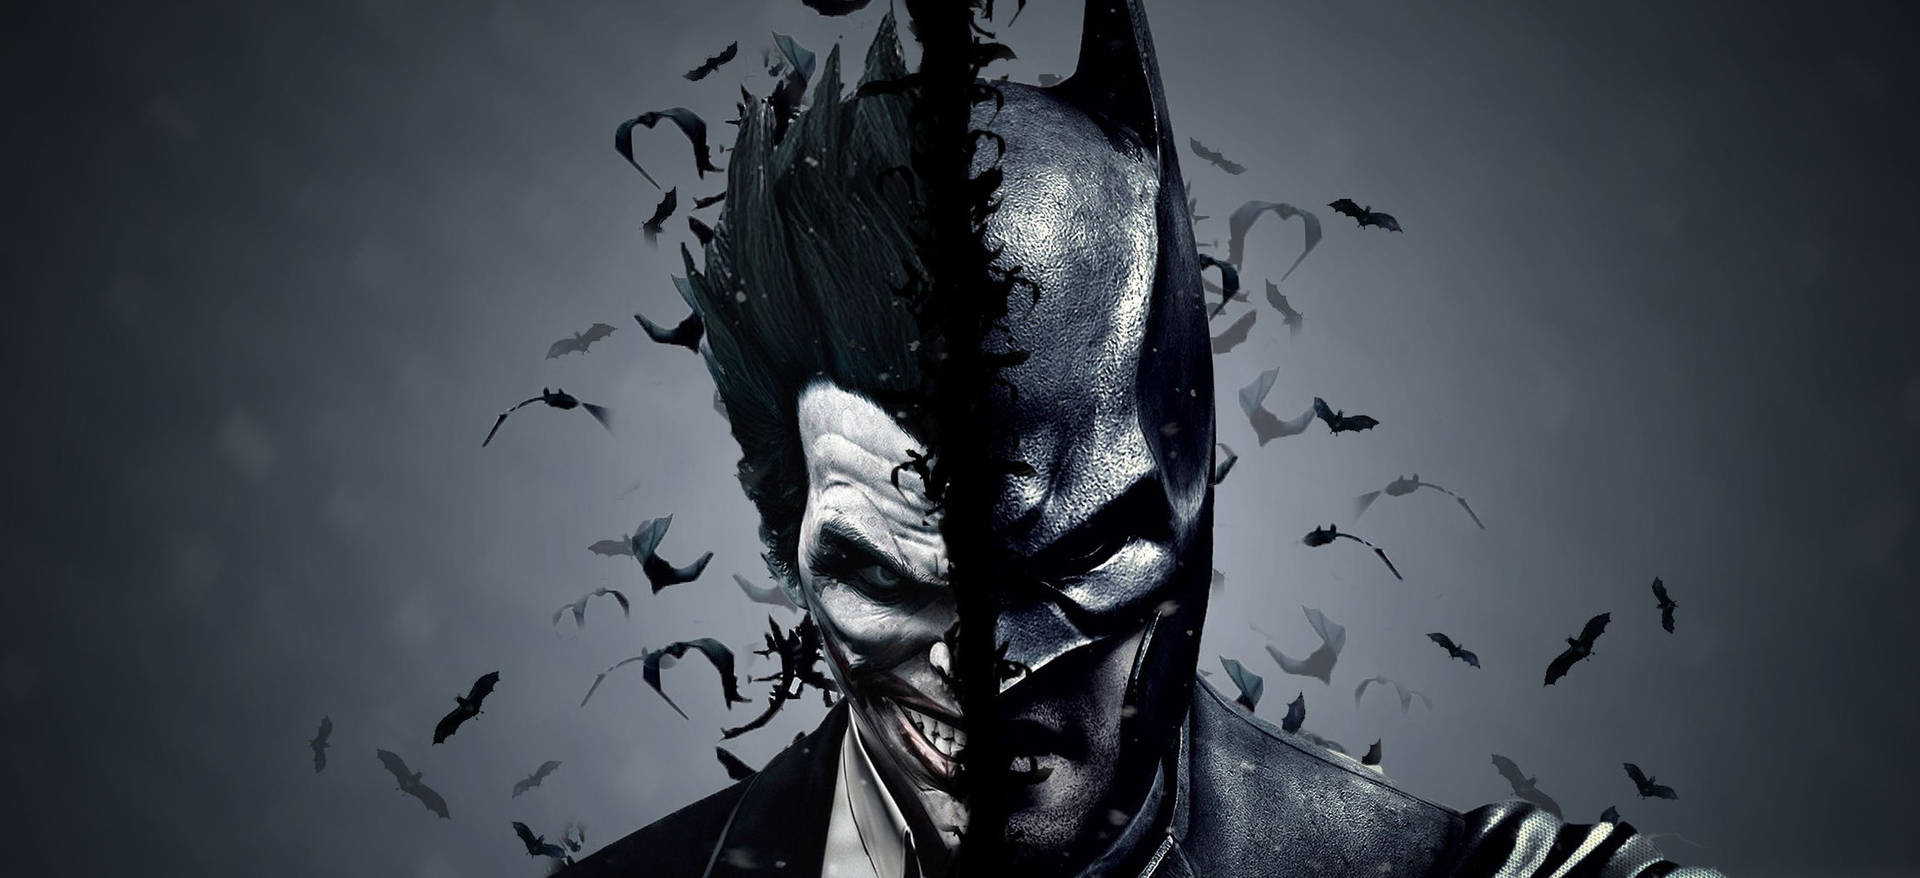 Cool Pictures Joker And Batman Wallpaper